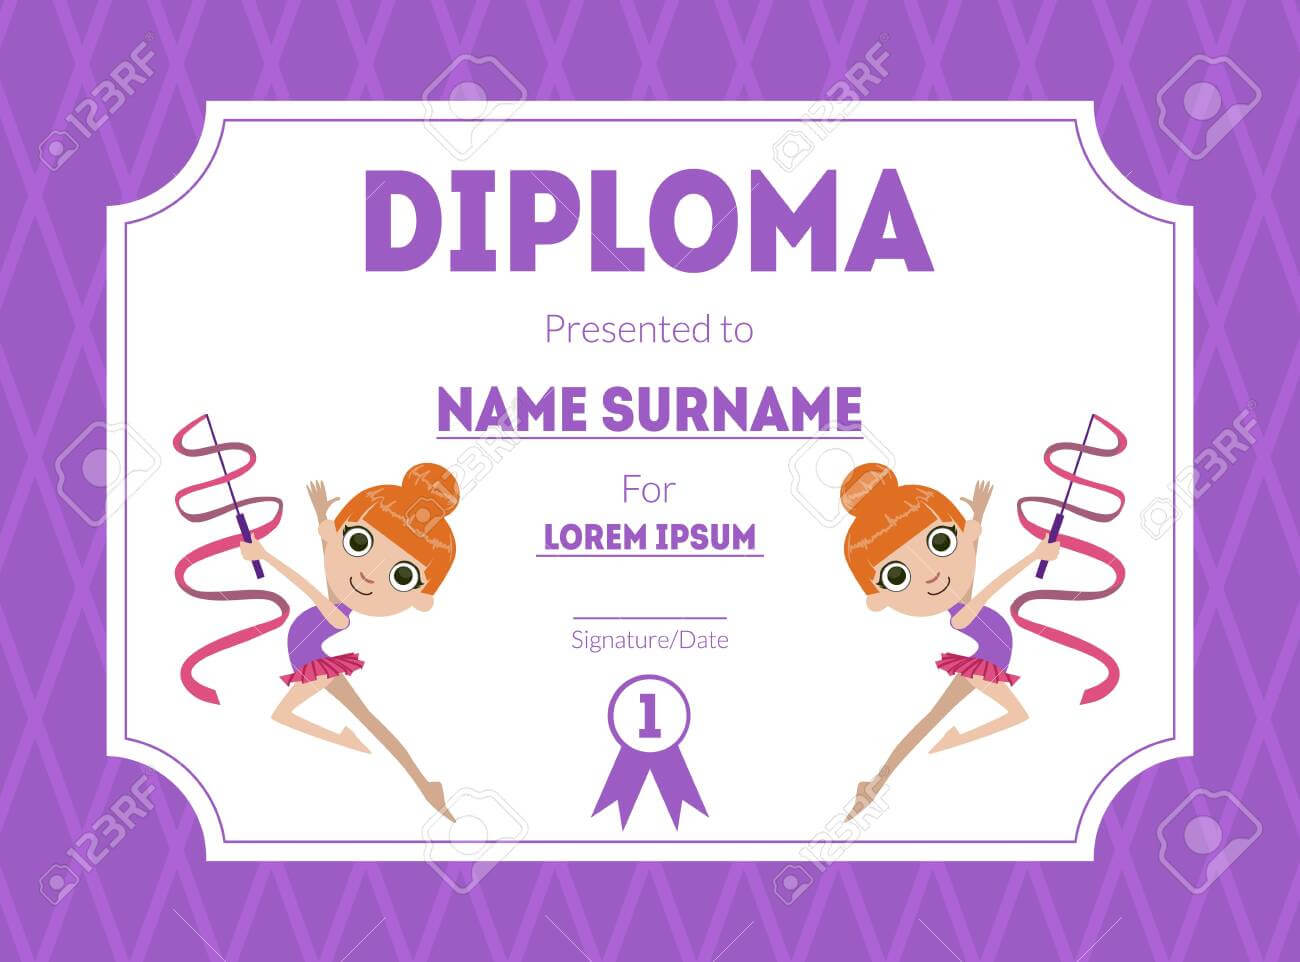 Sports Award Diploma Template, Kids Certificate With Gymnast.. Within Gymnastics Certificate Template